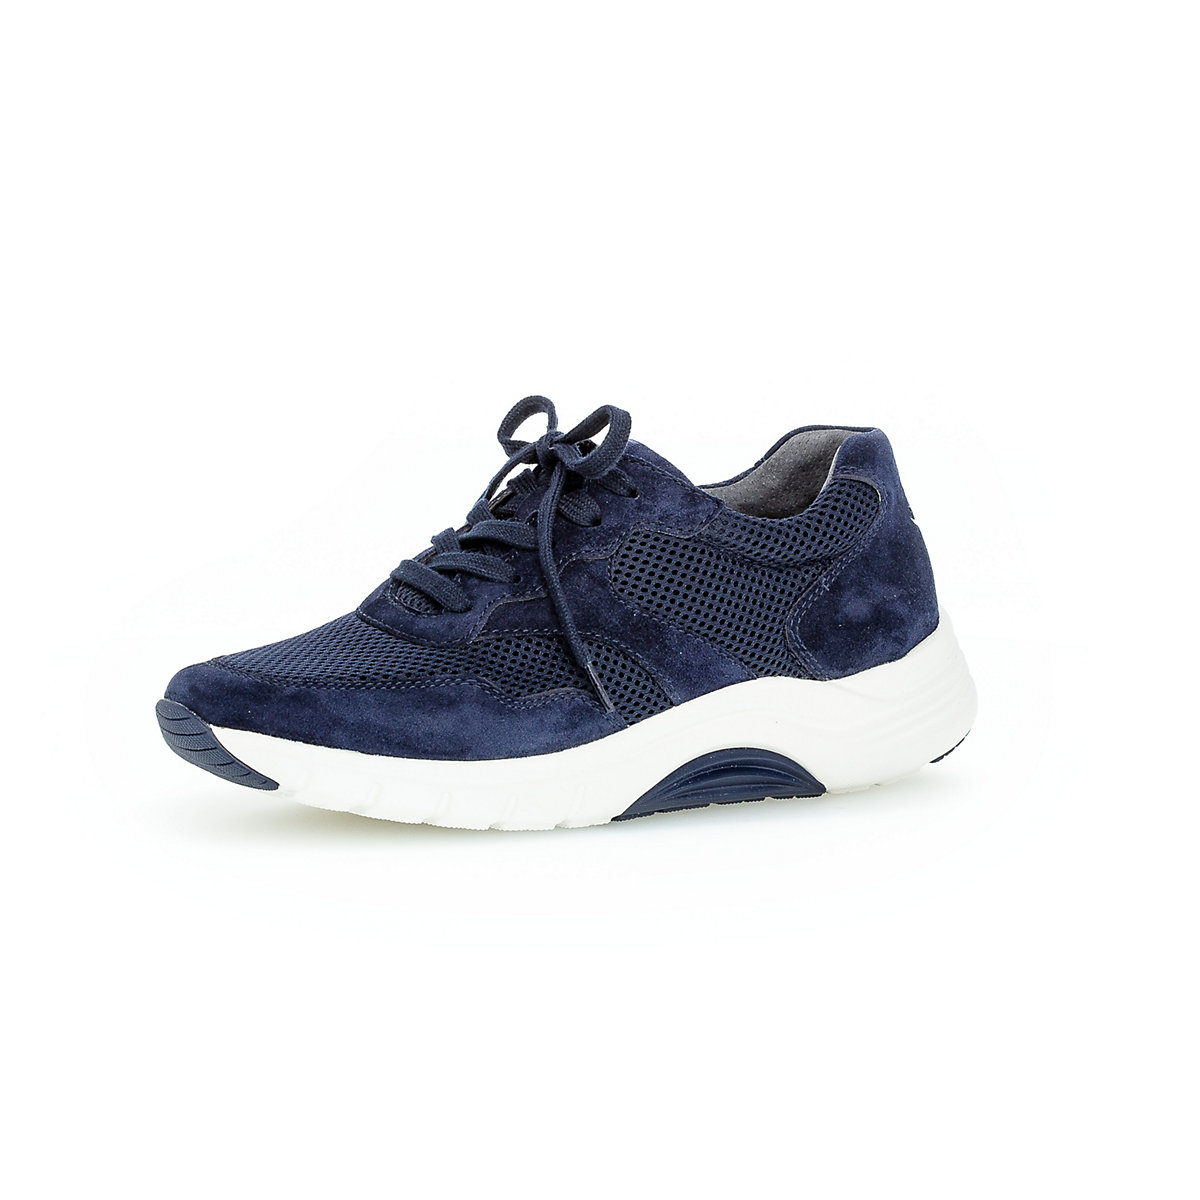 rollingsoft sensitive Rollingsoft Sneaker low Materialmix Leder/Lederimitat blau Sneakers Low blau